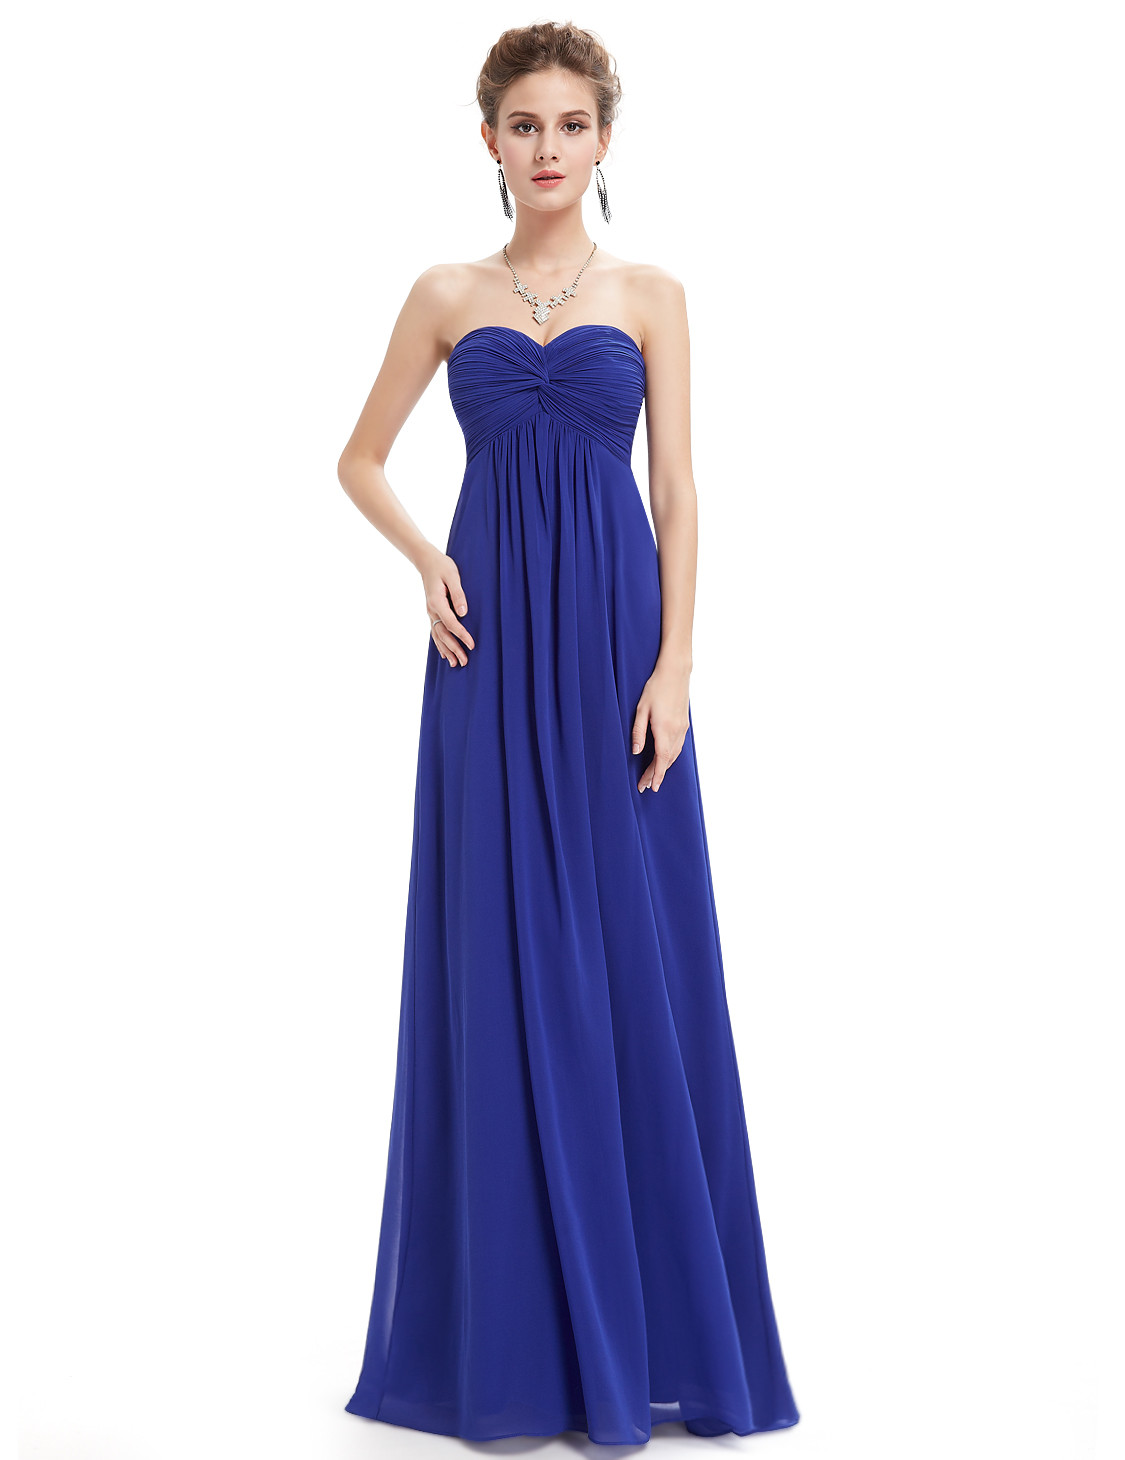 Strapless Royal Blue Sweetheart Bridesmaid Dress